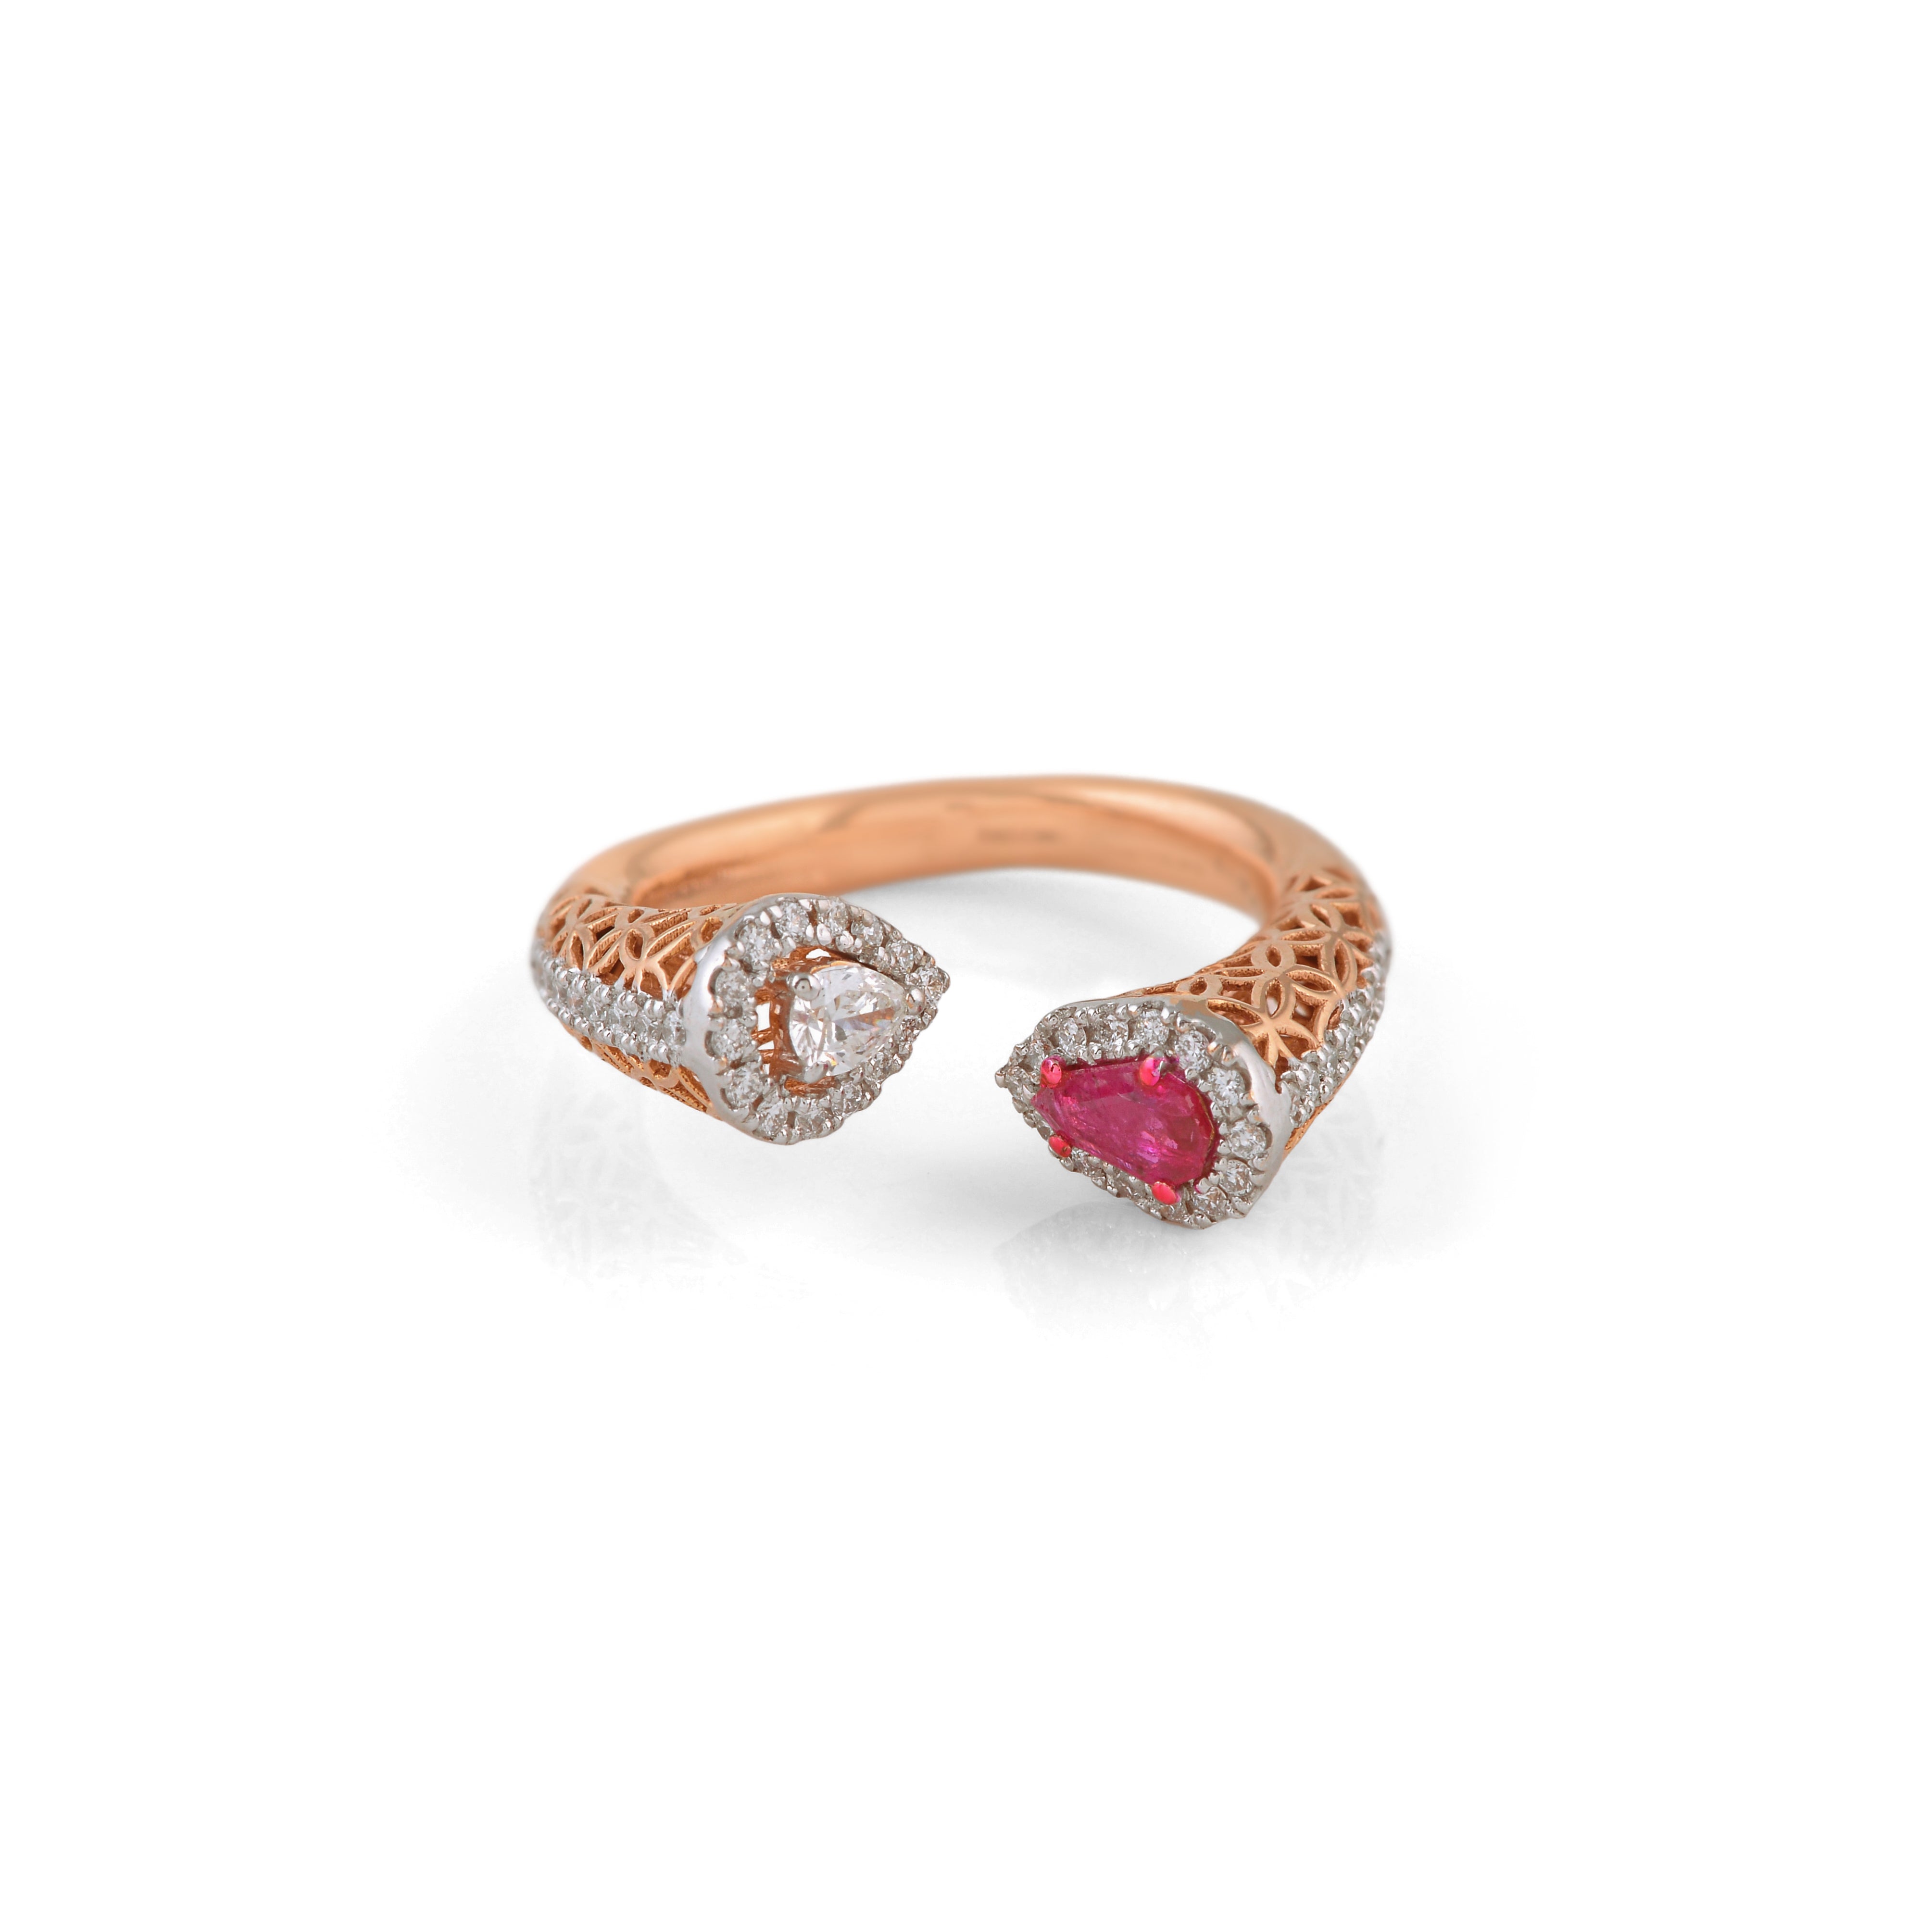 Artful Pear Cut Diamond Ring in Rose Gold